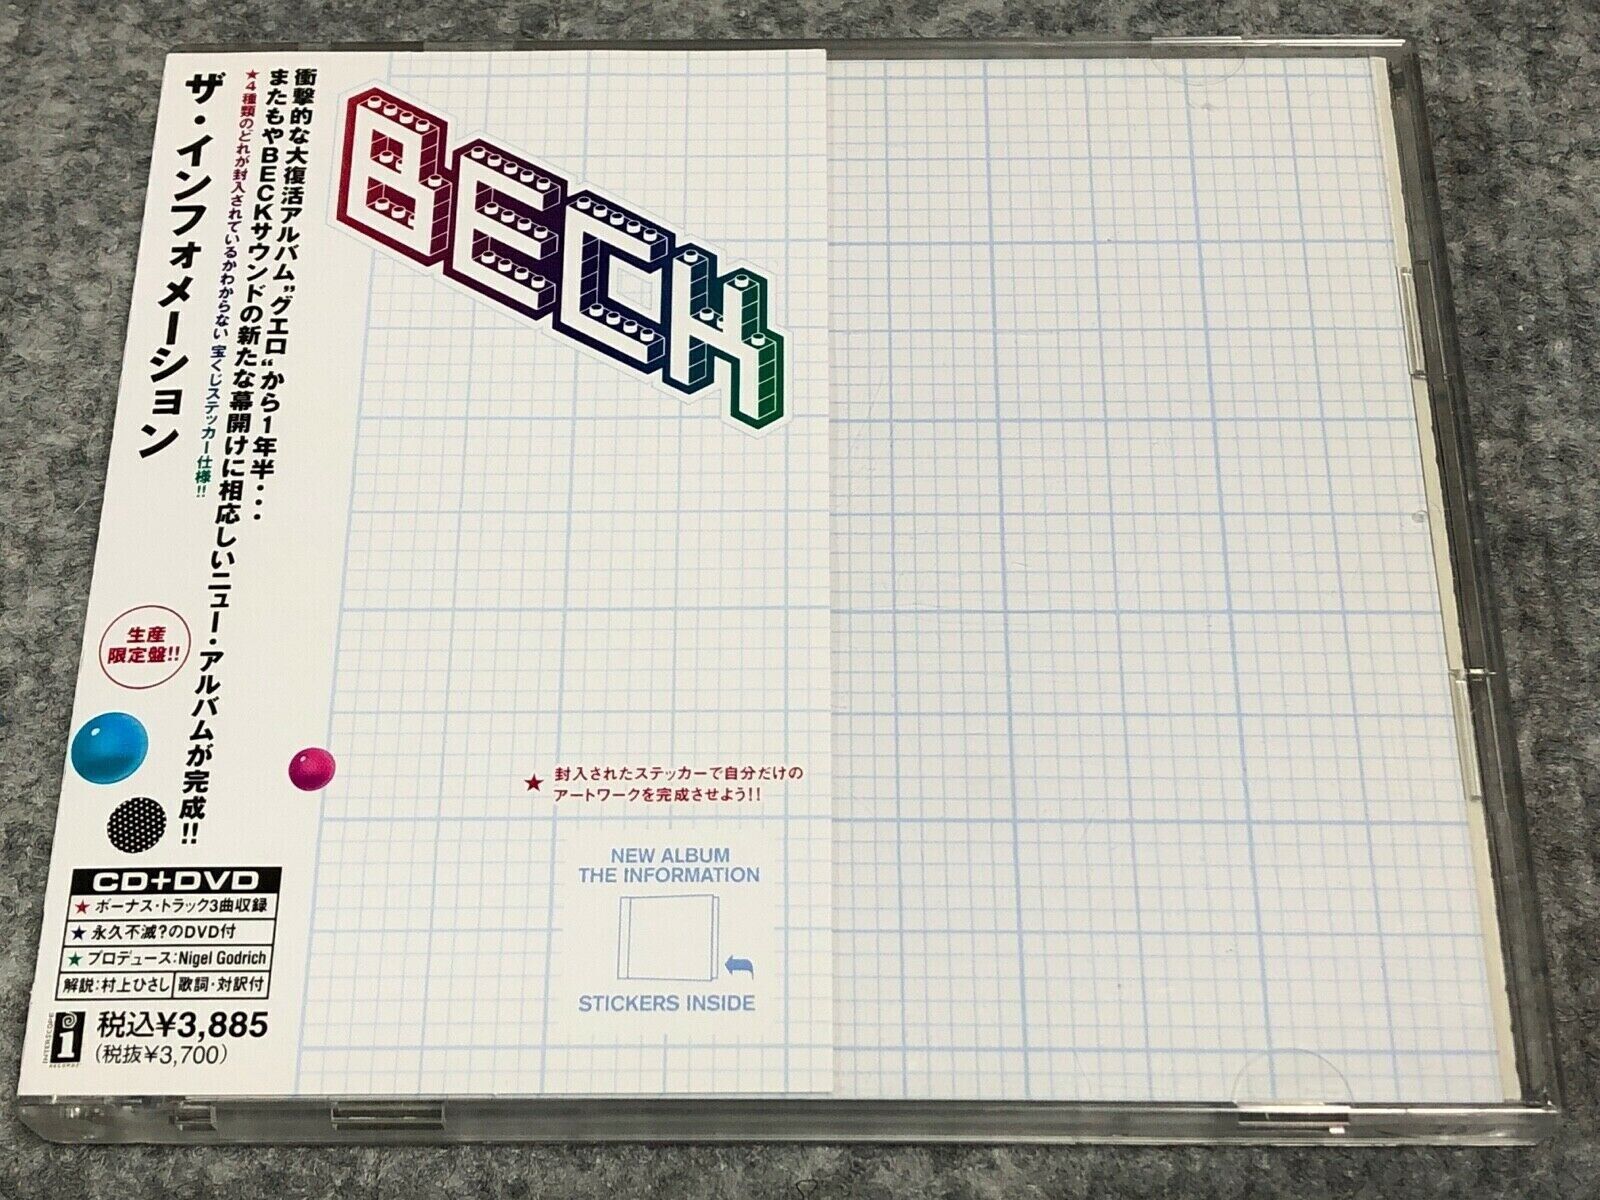 Beck The Information Japan Import Bonus Track+3 CD+DVD with